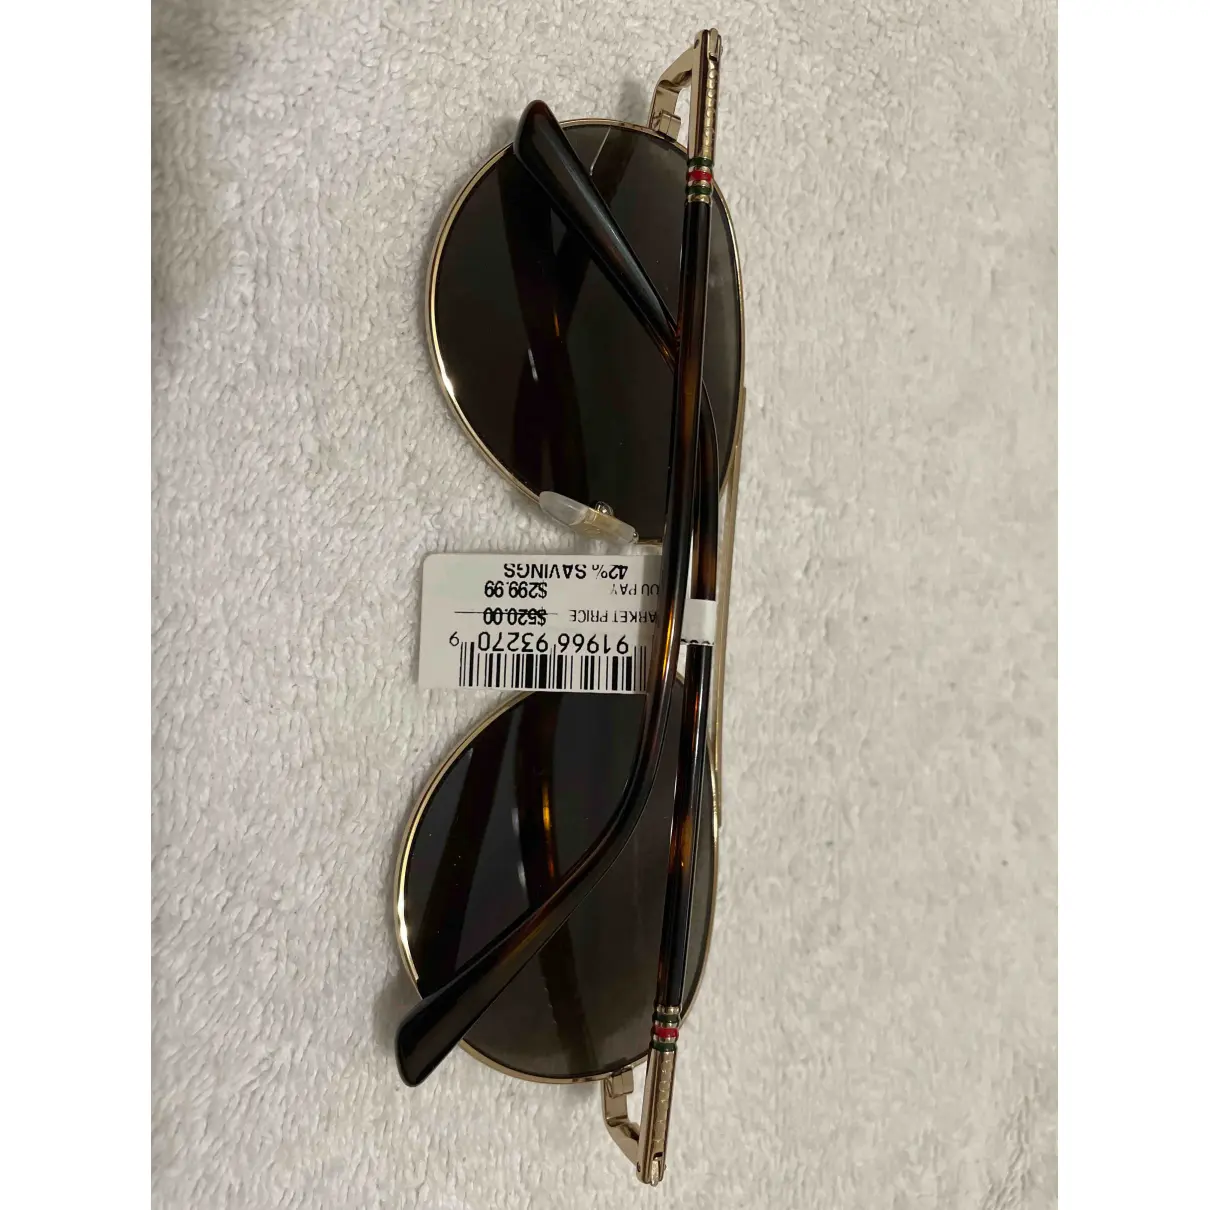 Buy Gucci Aviator sunglasses online